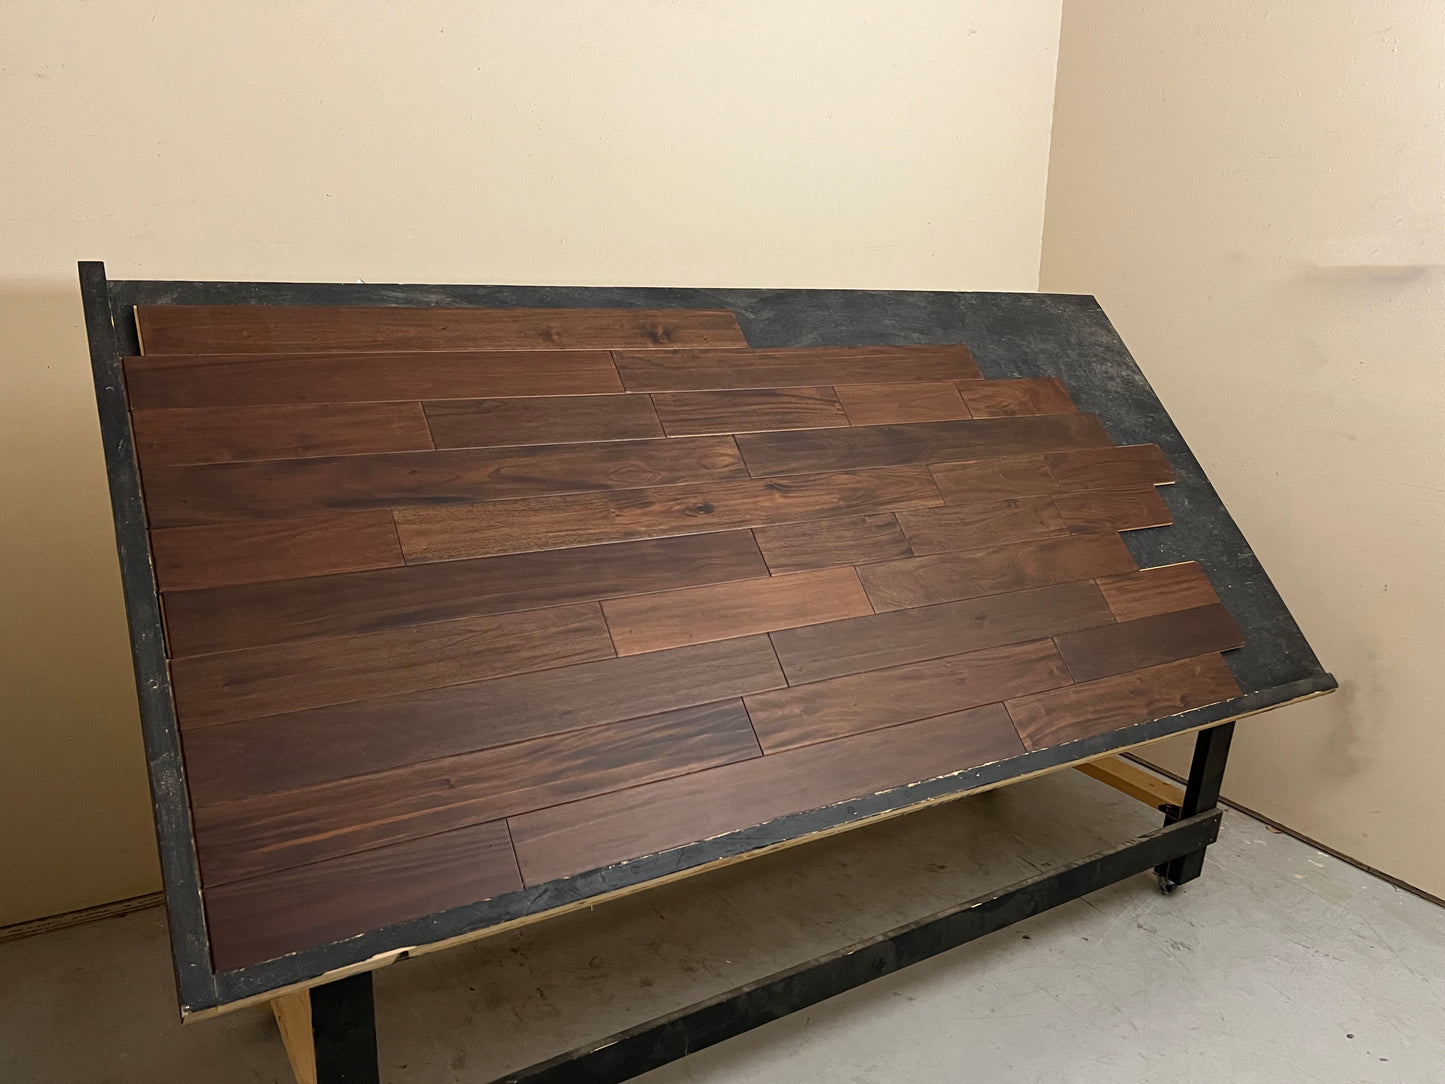 4 1/3" x 5/8" Solid Mahogany Woodlands Hardwood Flooring